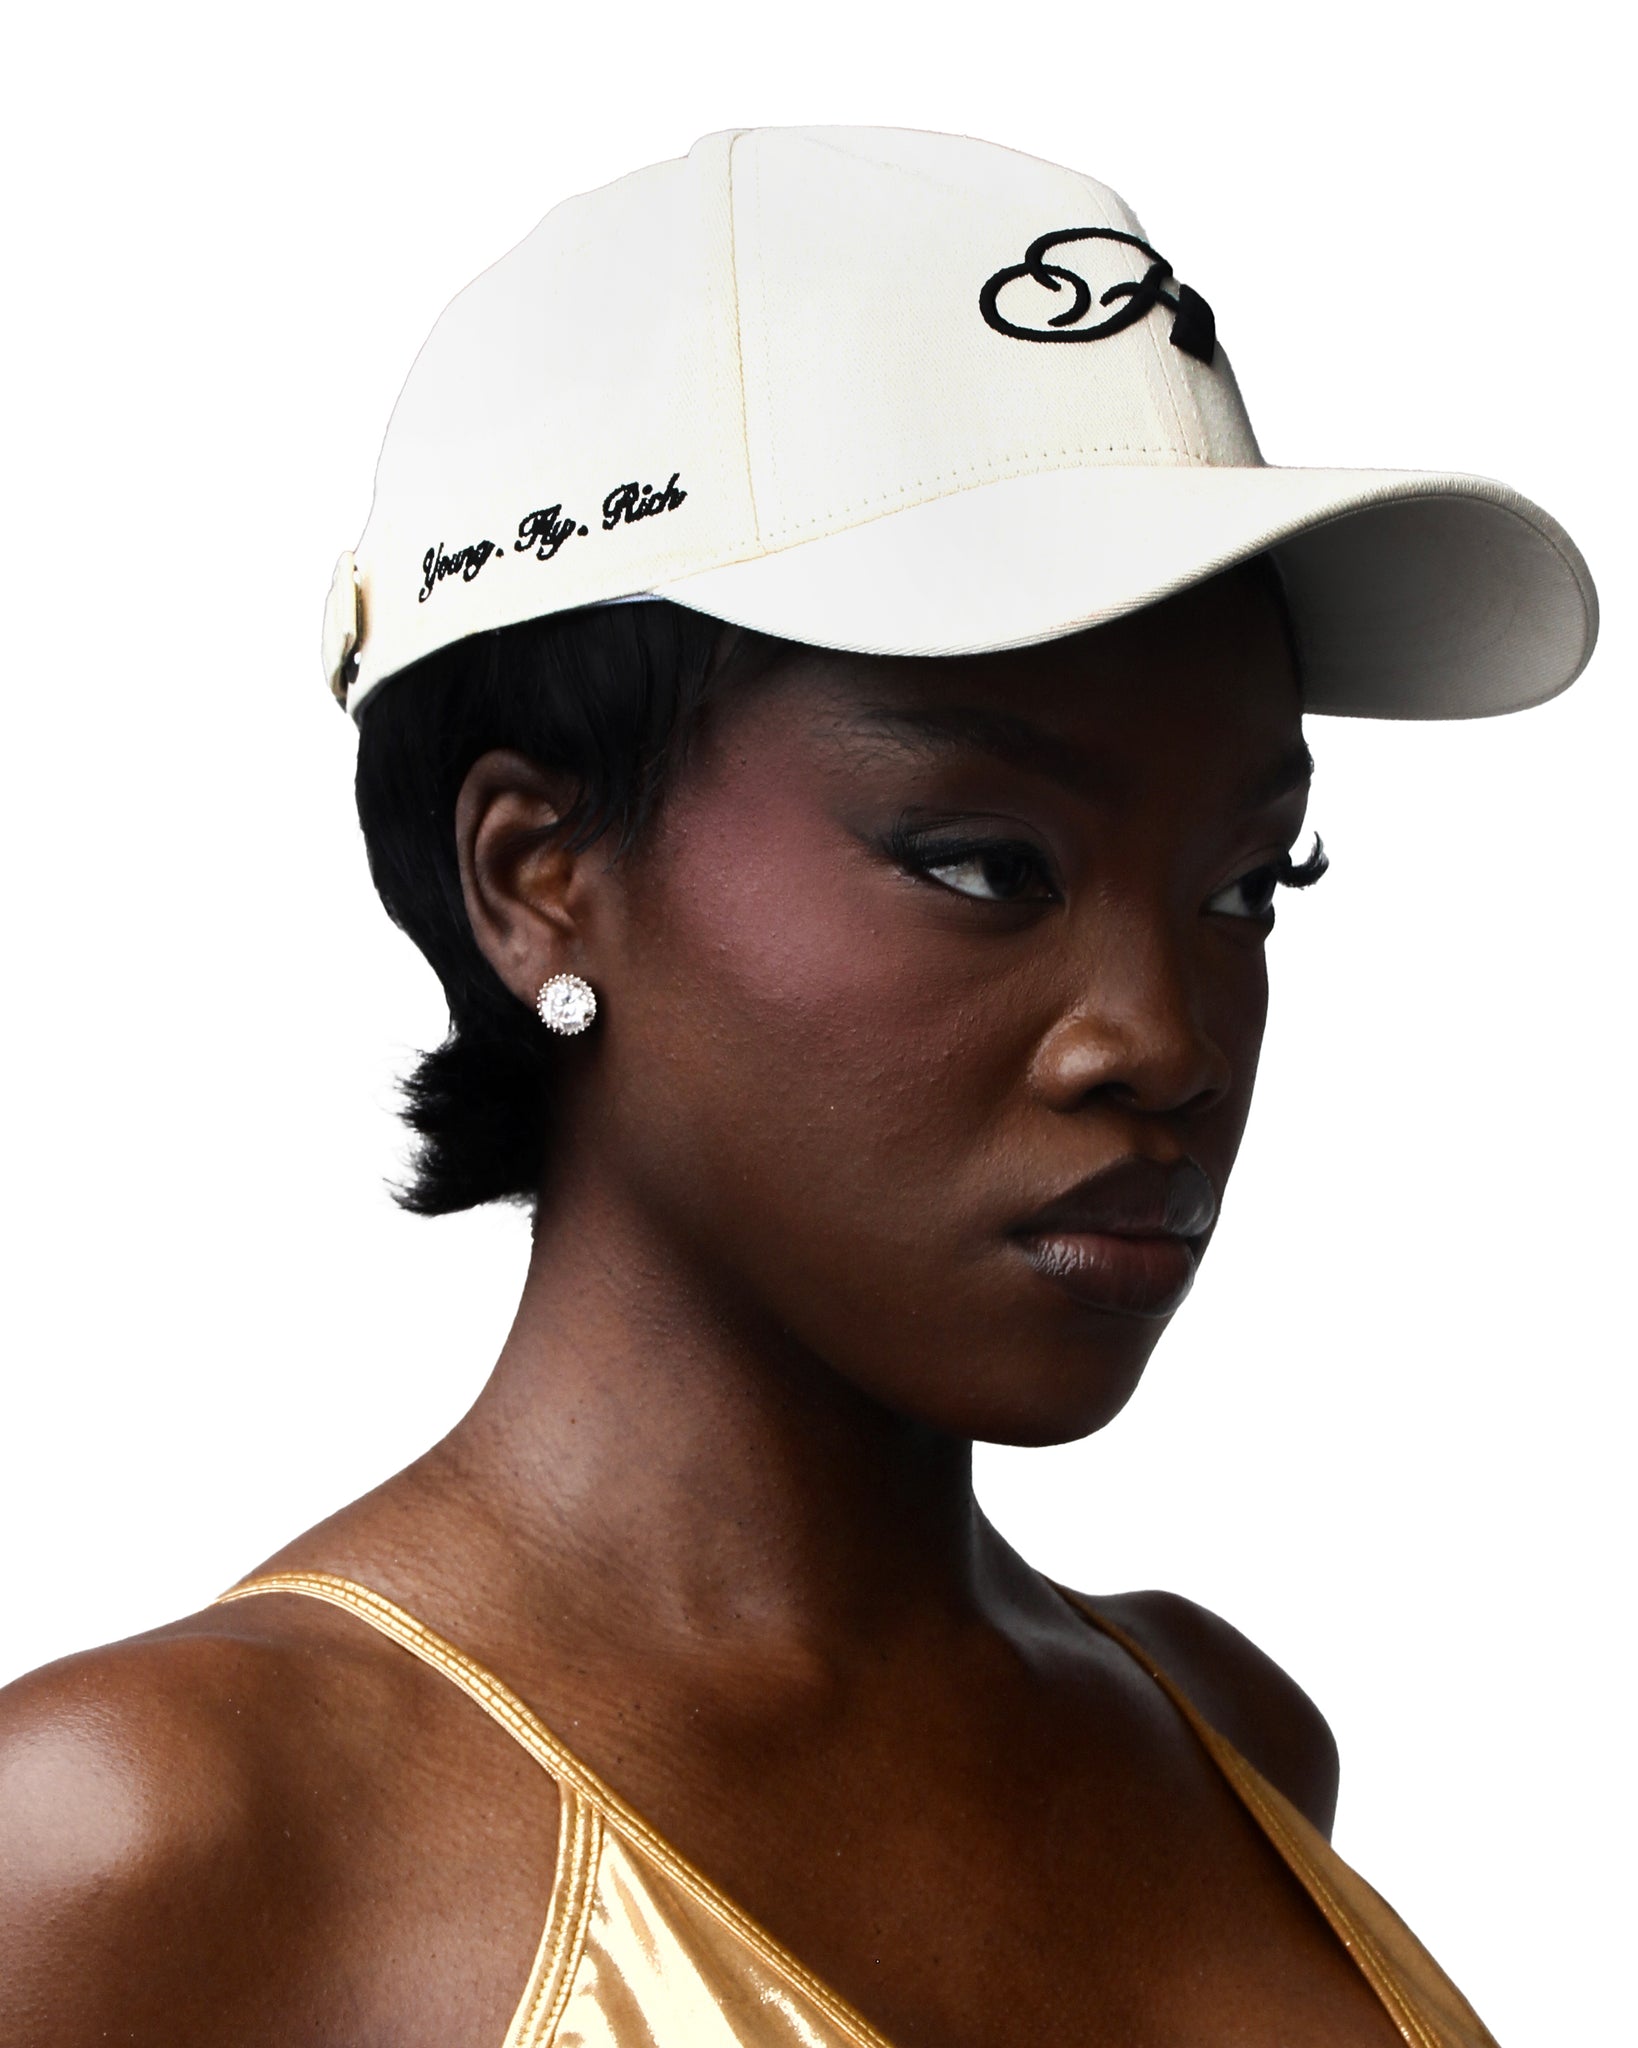 Stylish cream cap made of soft cotton, showcasing a branded logo upfront.